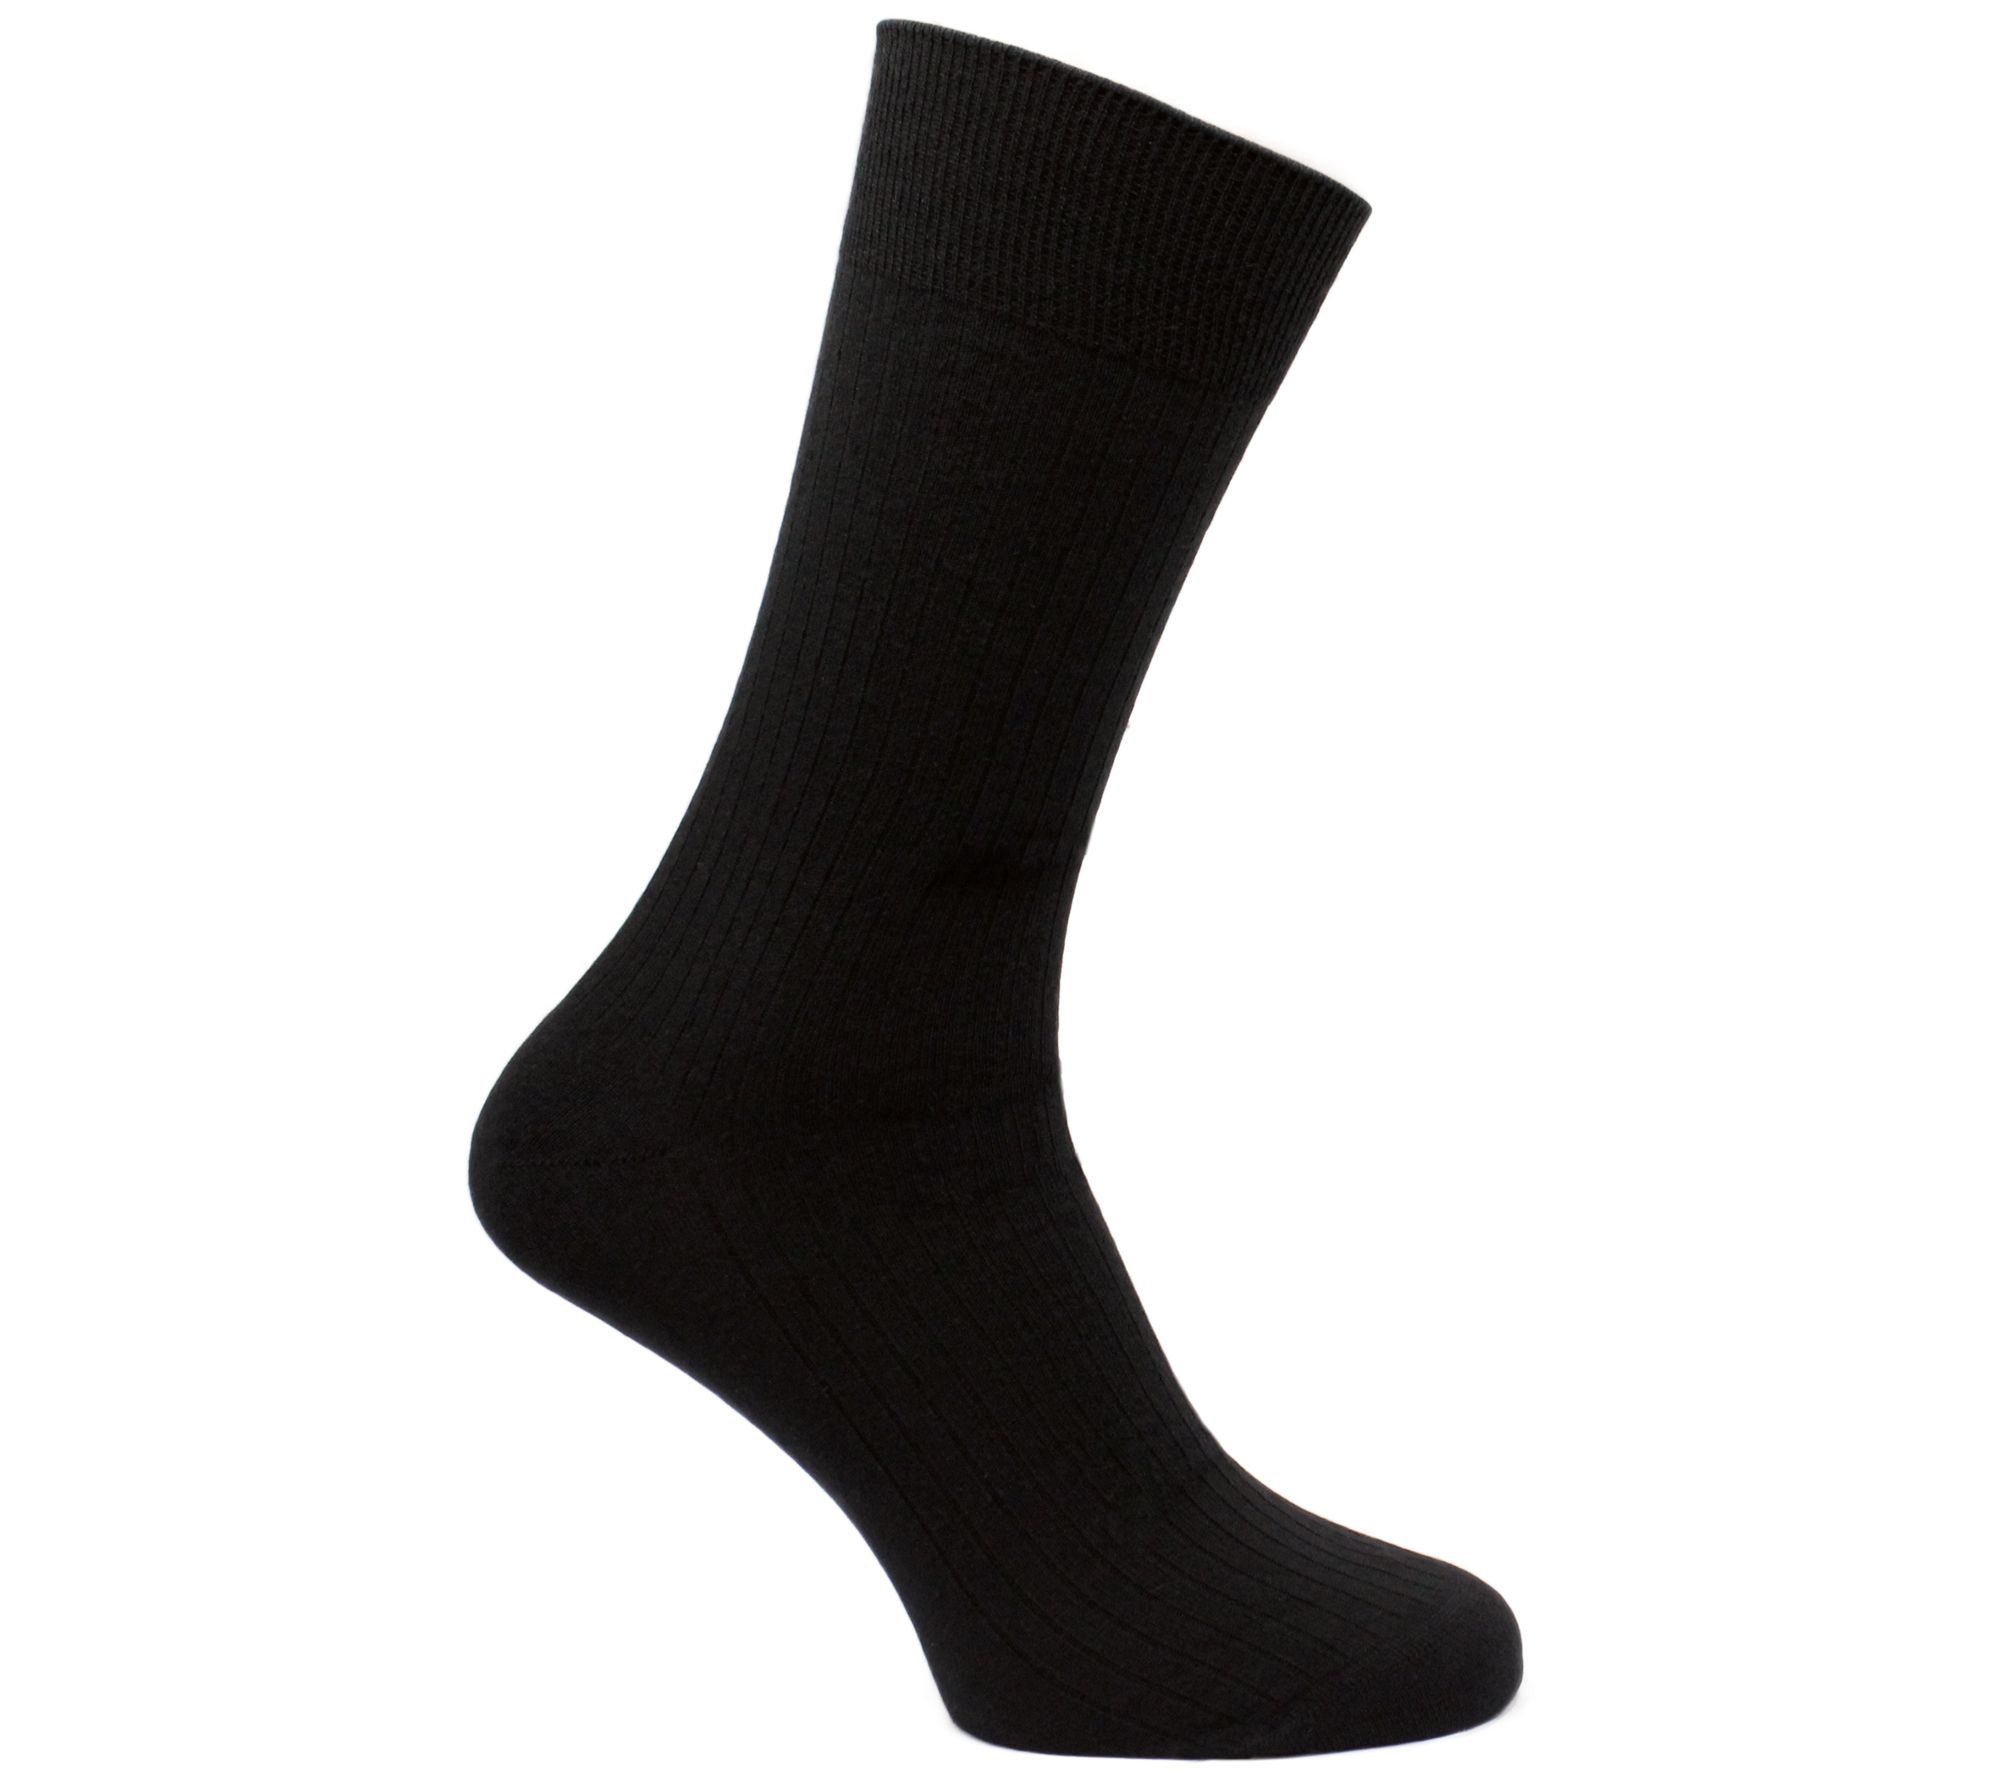 Norfolk Socks Men's Ribbed Cashmere Fashion Crew Socks - QVC.com